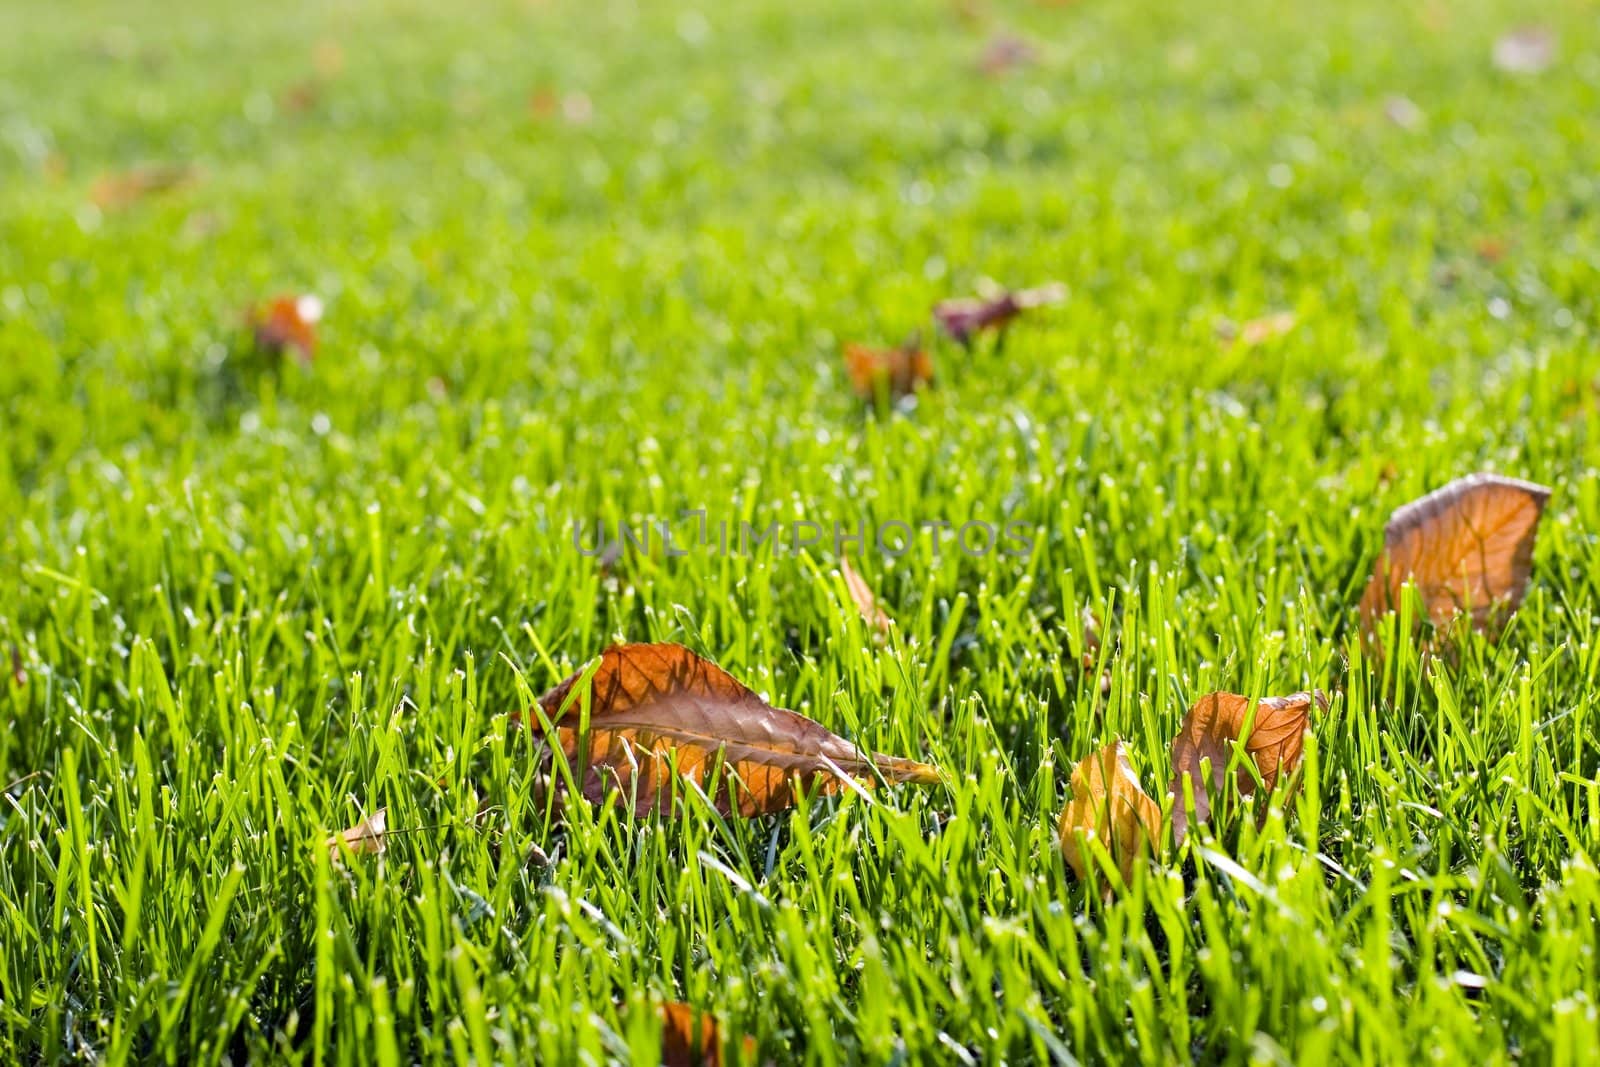 Autumn Grass by AlexKhrom